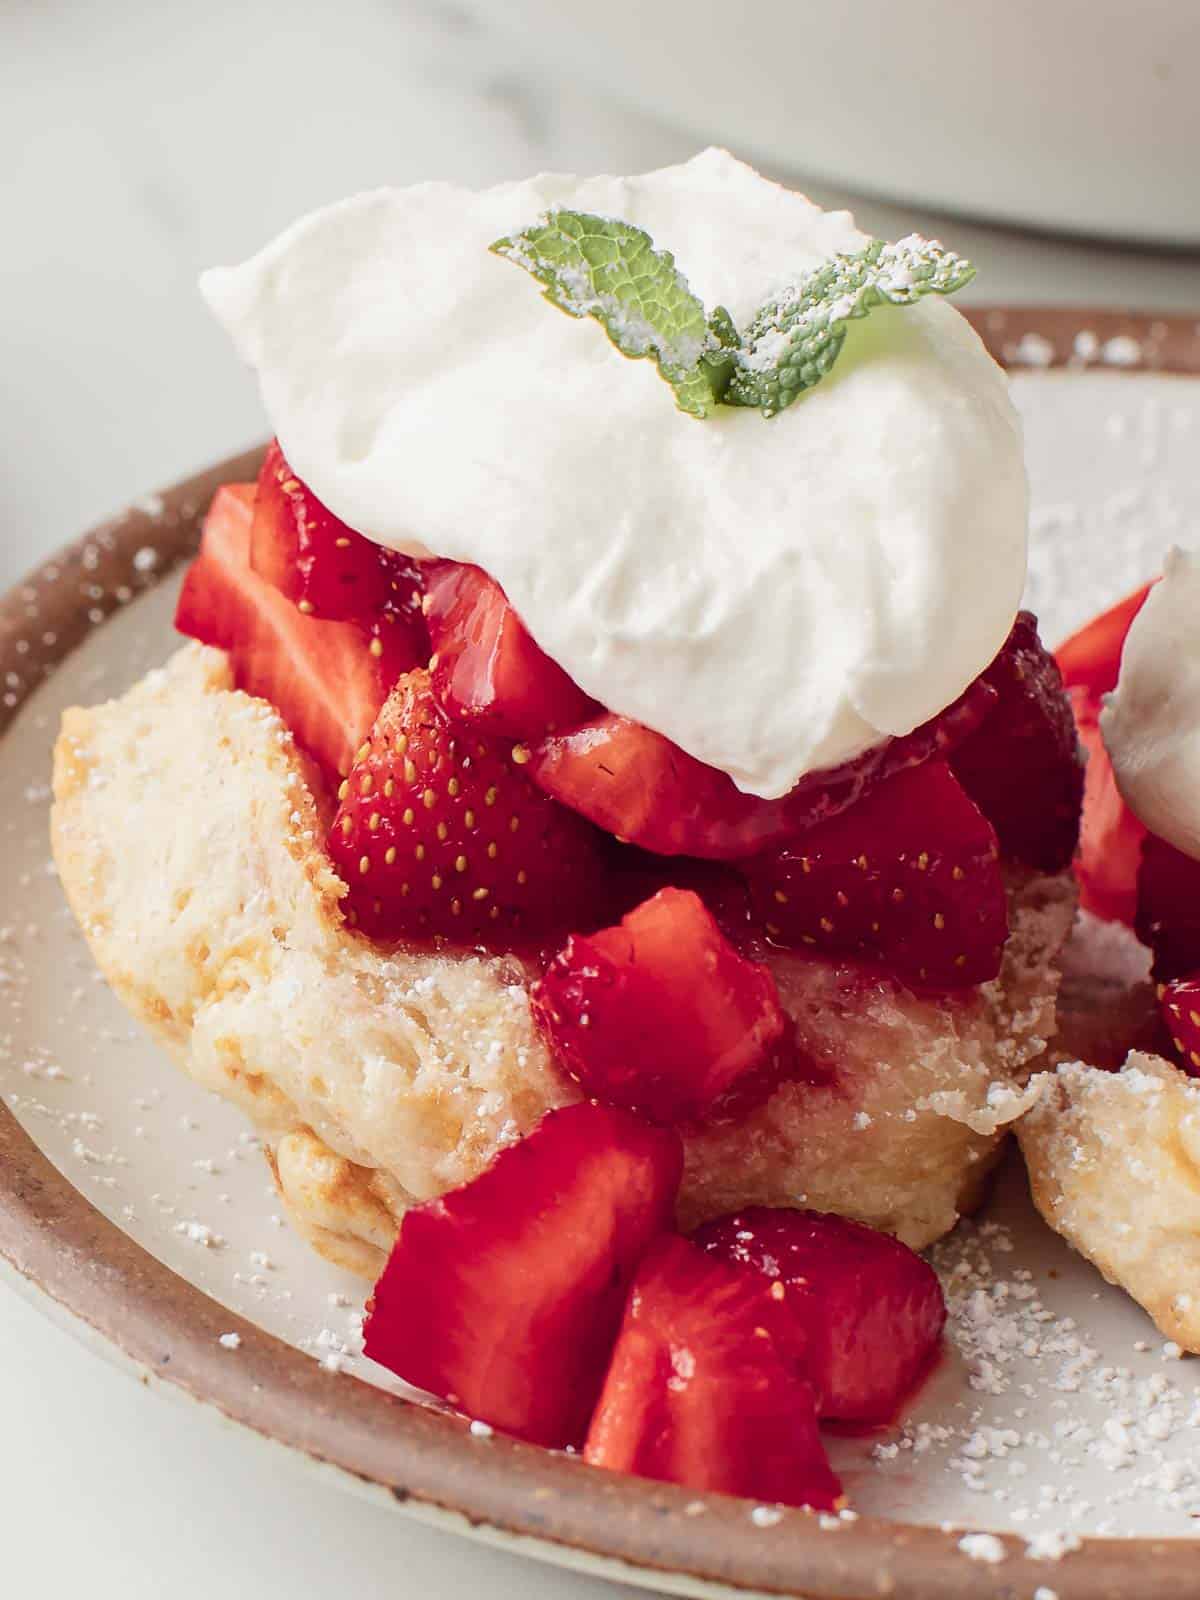 Sourdough strawberry shortcake on a plate with powdered sugar.